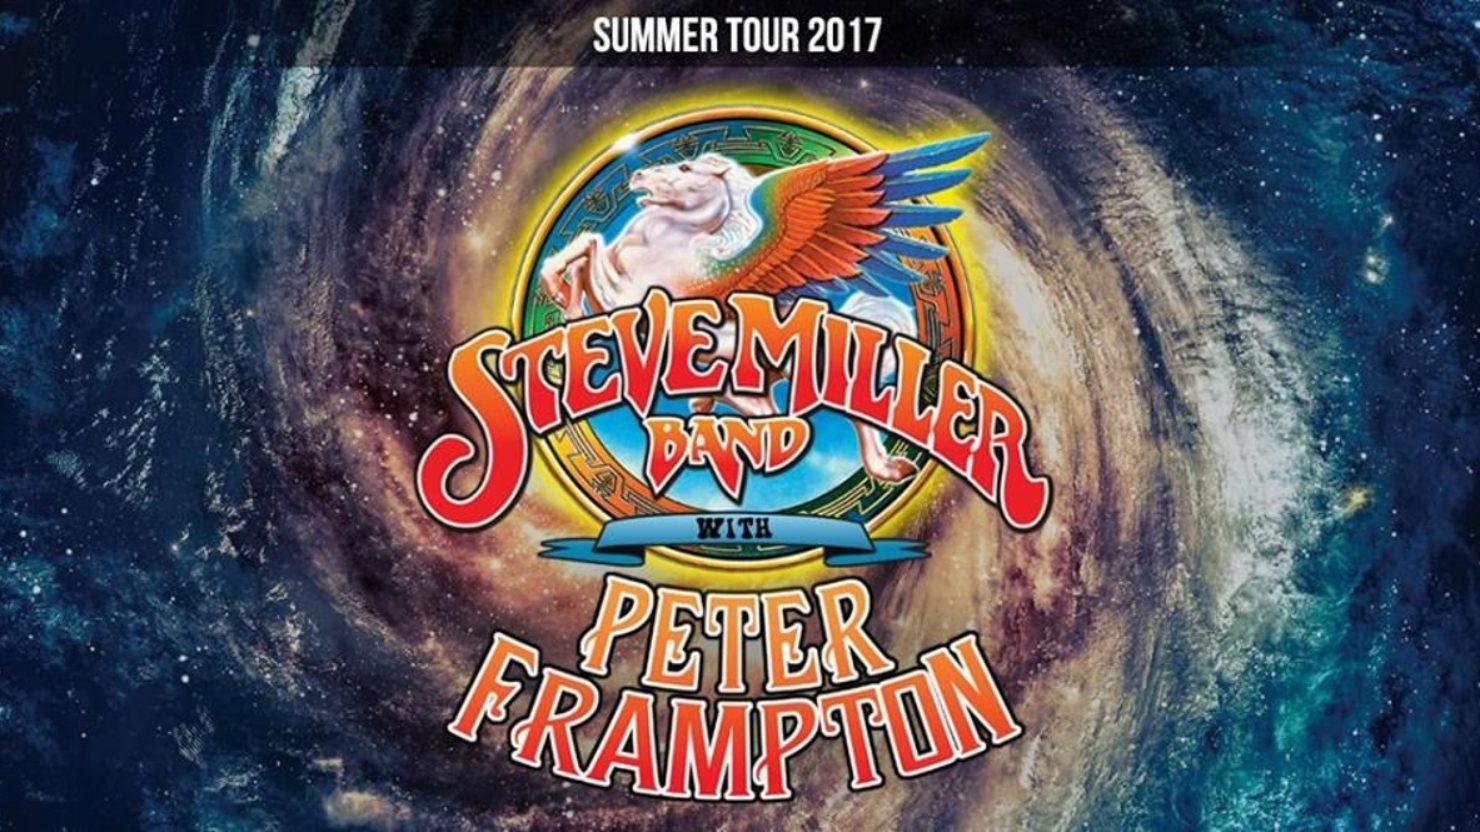 Frampton-Steve-Miller-Band-Tour-admat-1480x832